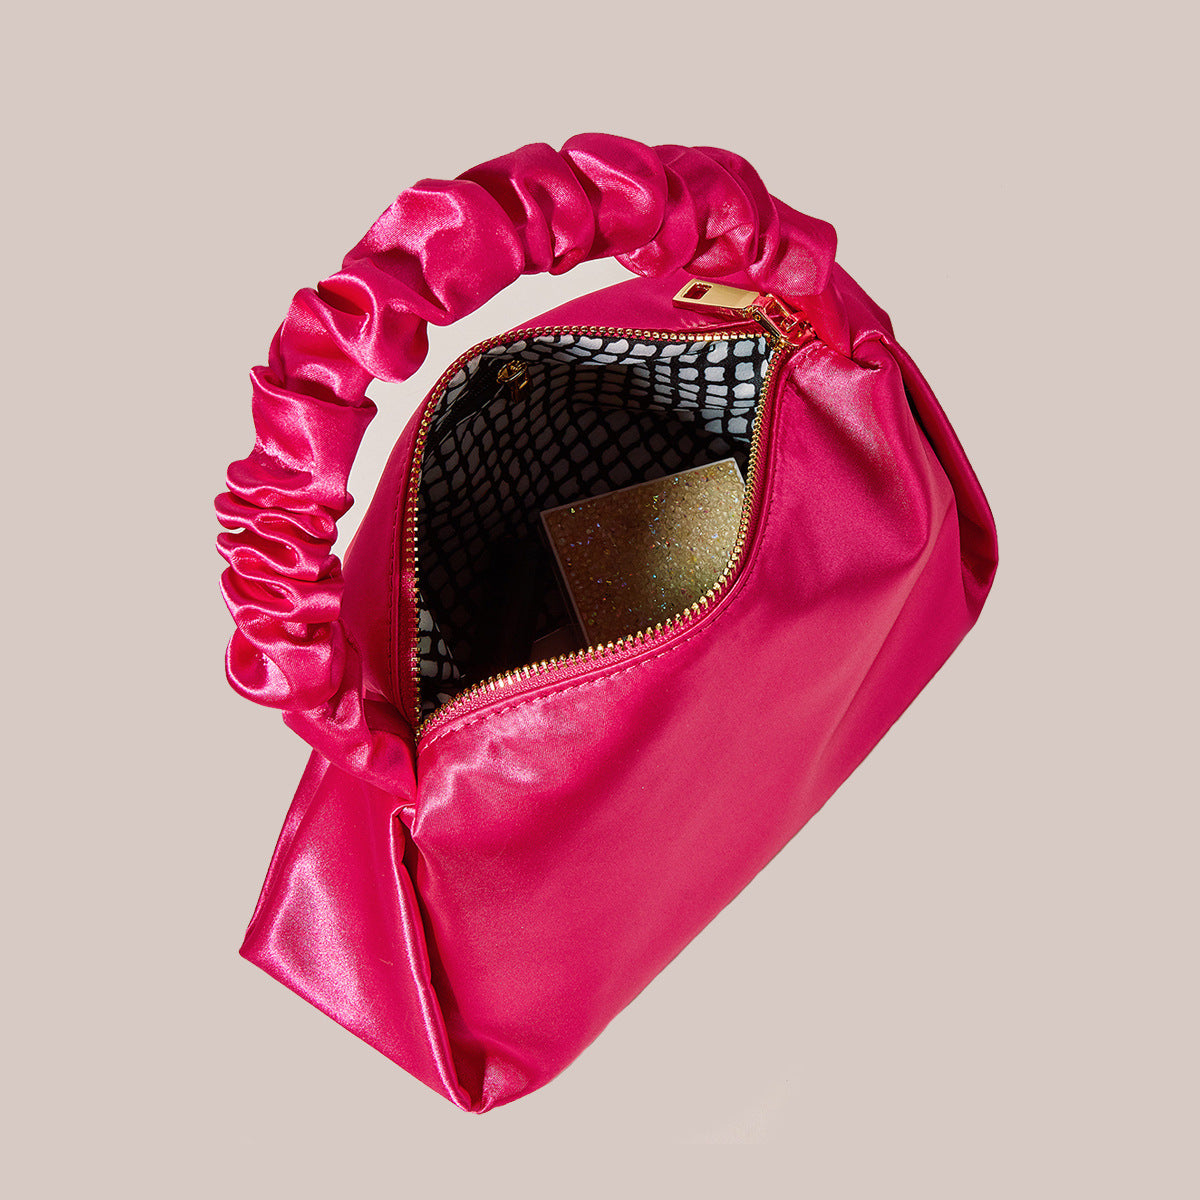 Realyn Bag - Braided Handle Mini Clutch Bag in Pink